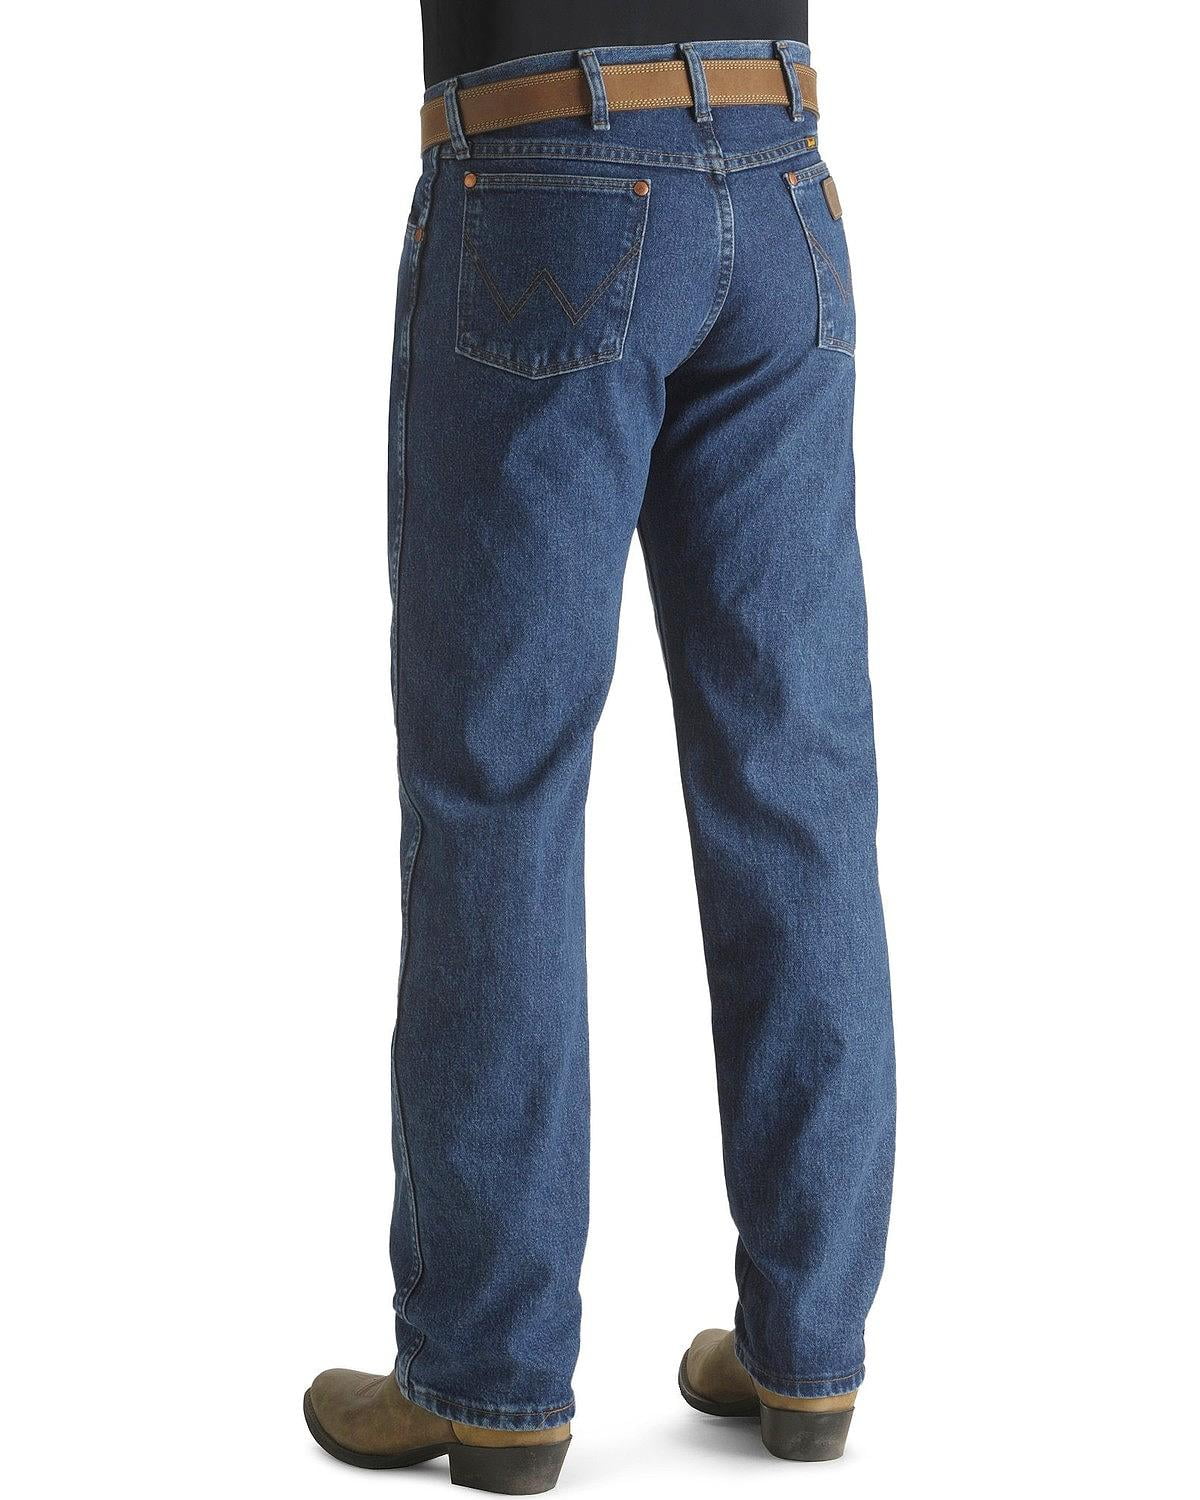 Wrangler - wrangler men's jeans 13mwz original fit premium wash reg ...